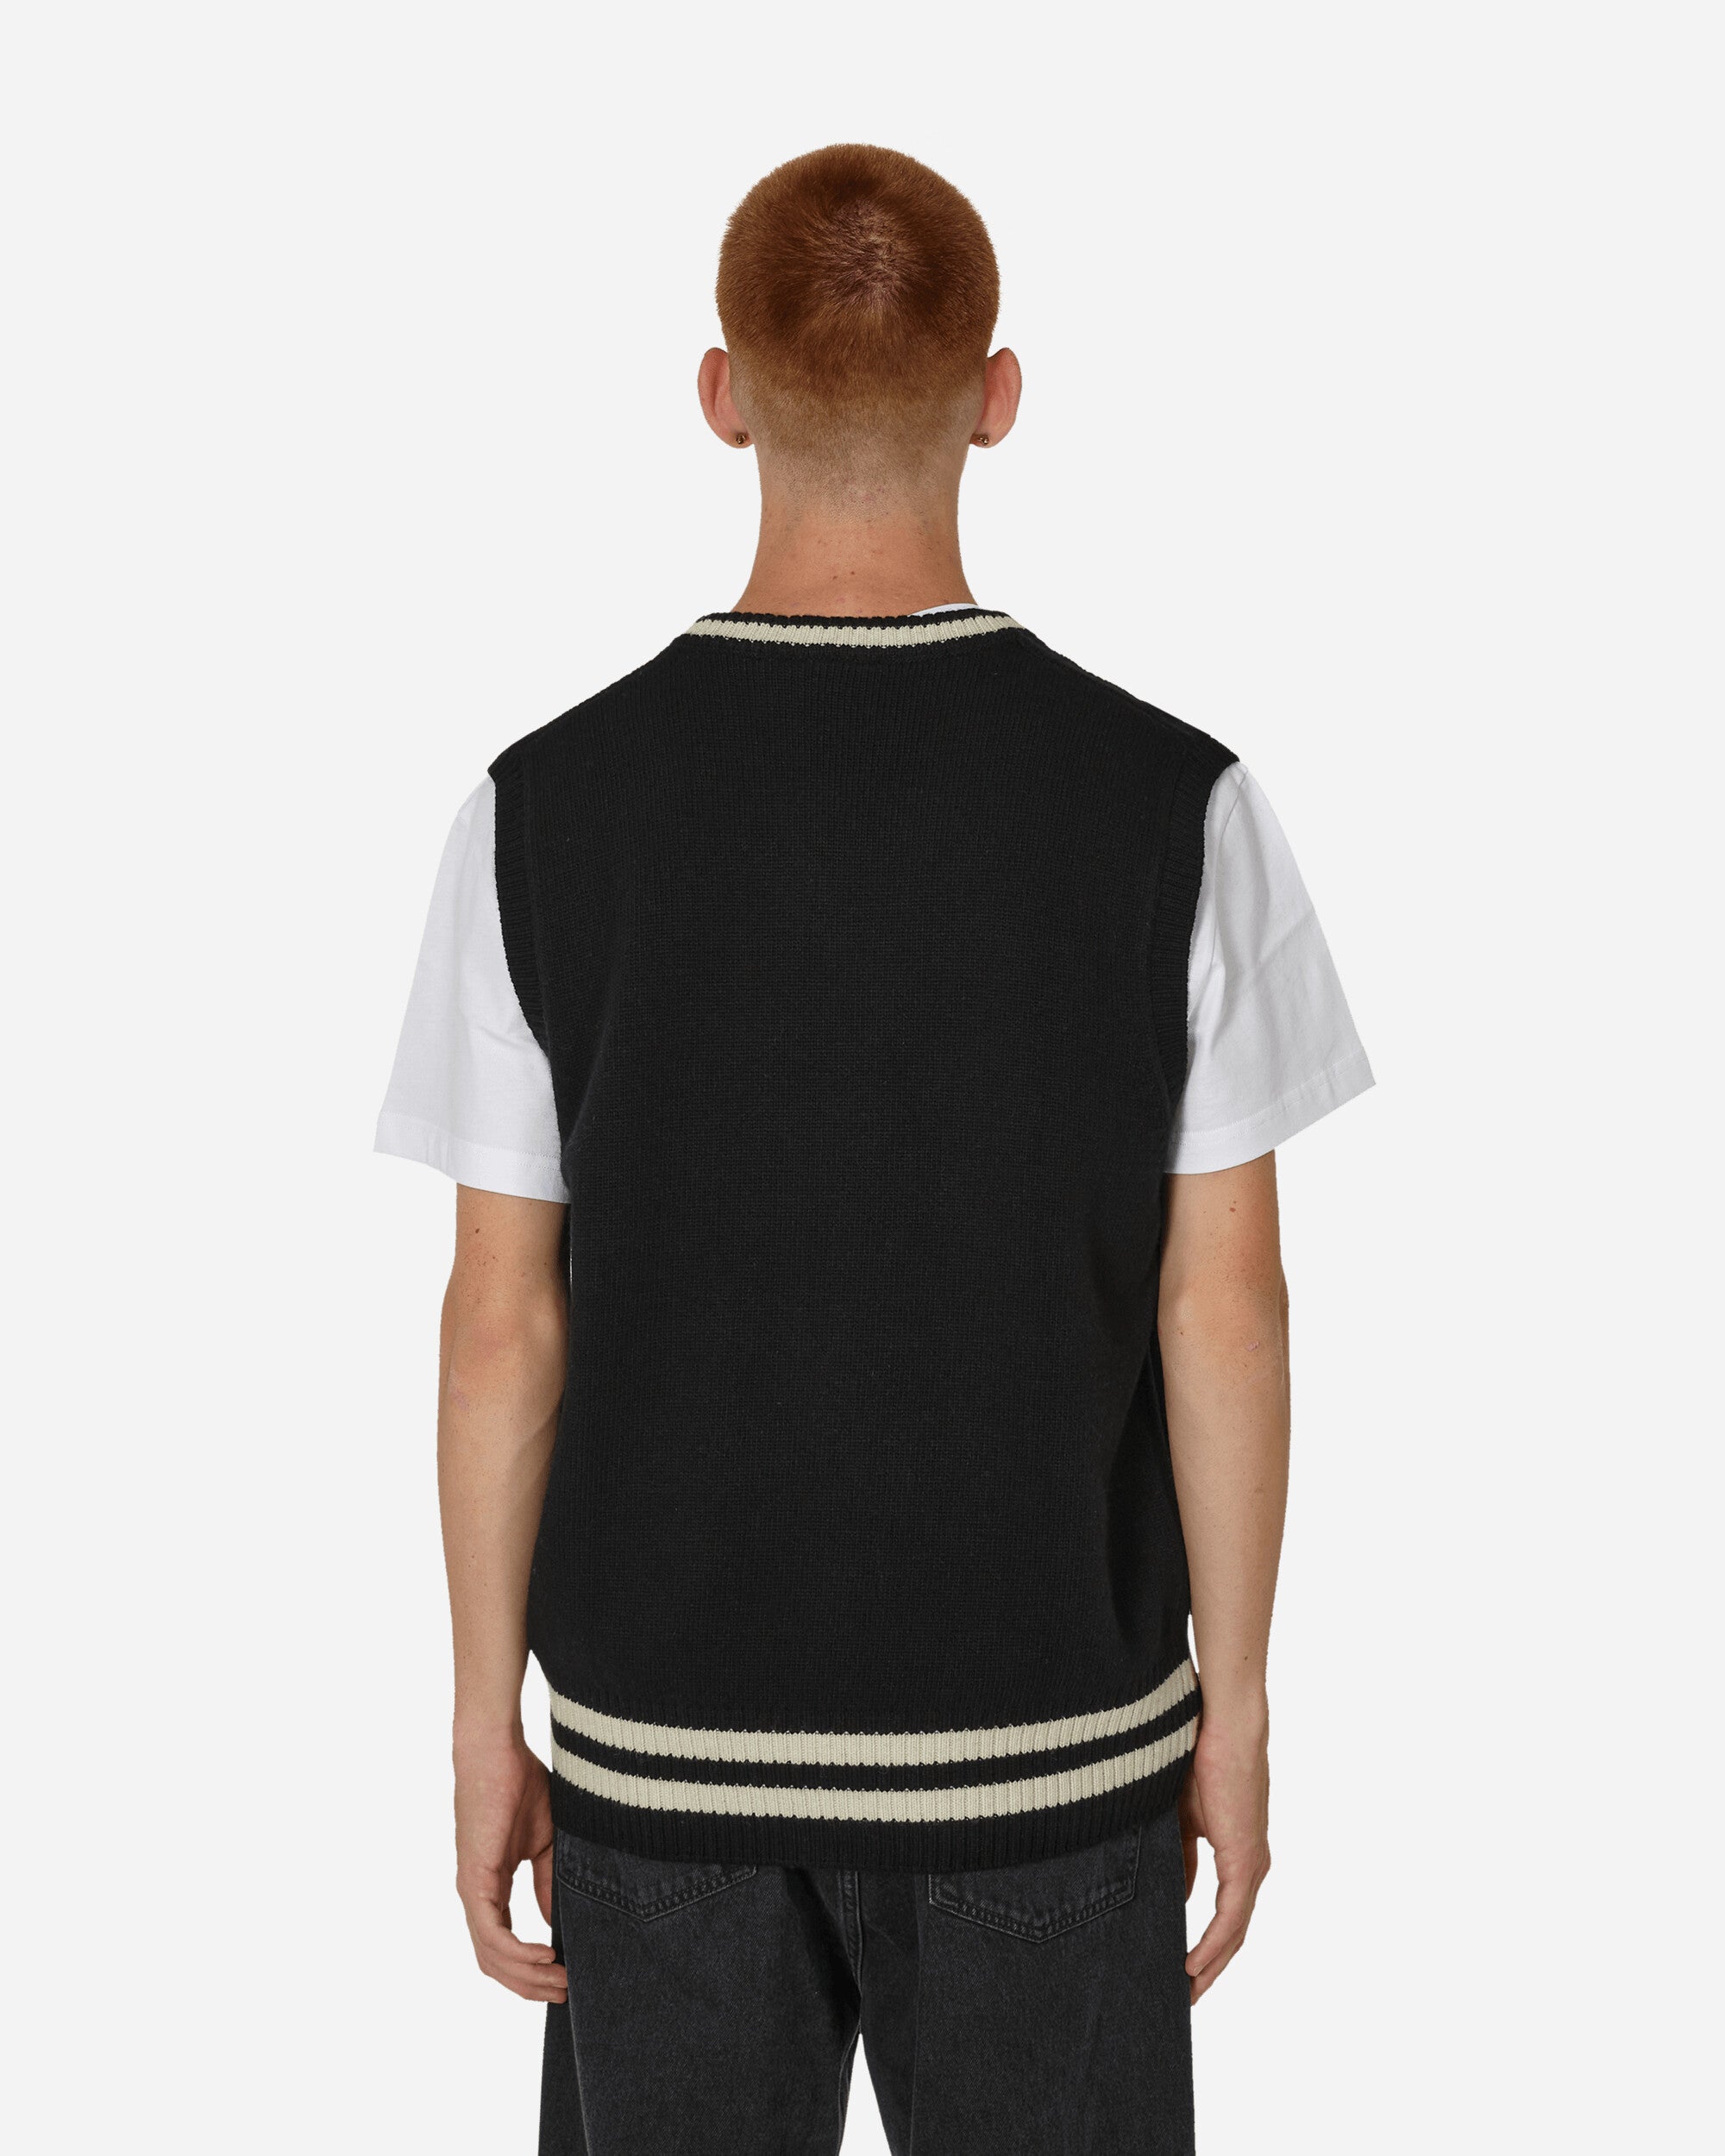 Carhartt WIP Stanford Vest Sweater Black/Salt Knitwears Gilets I032282 1T8XX